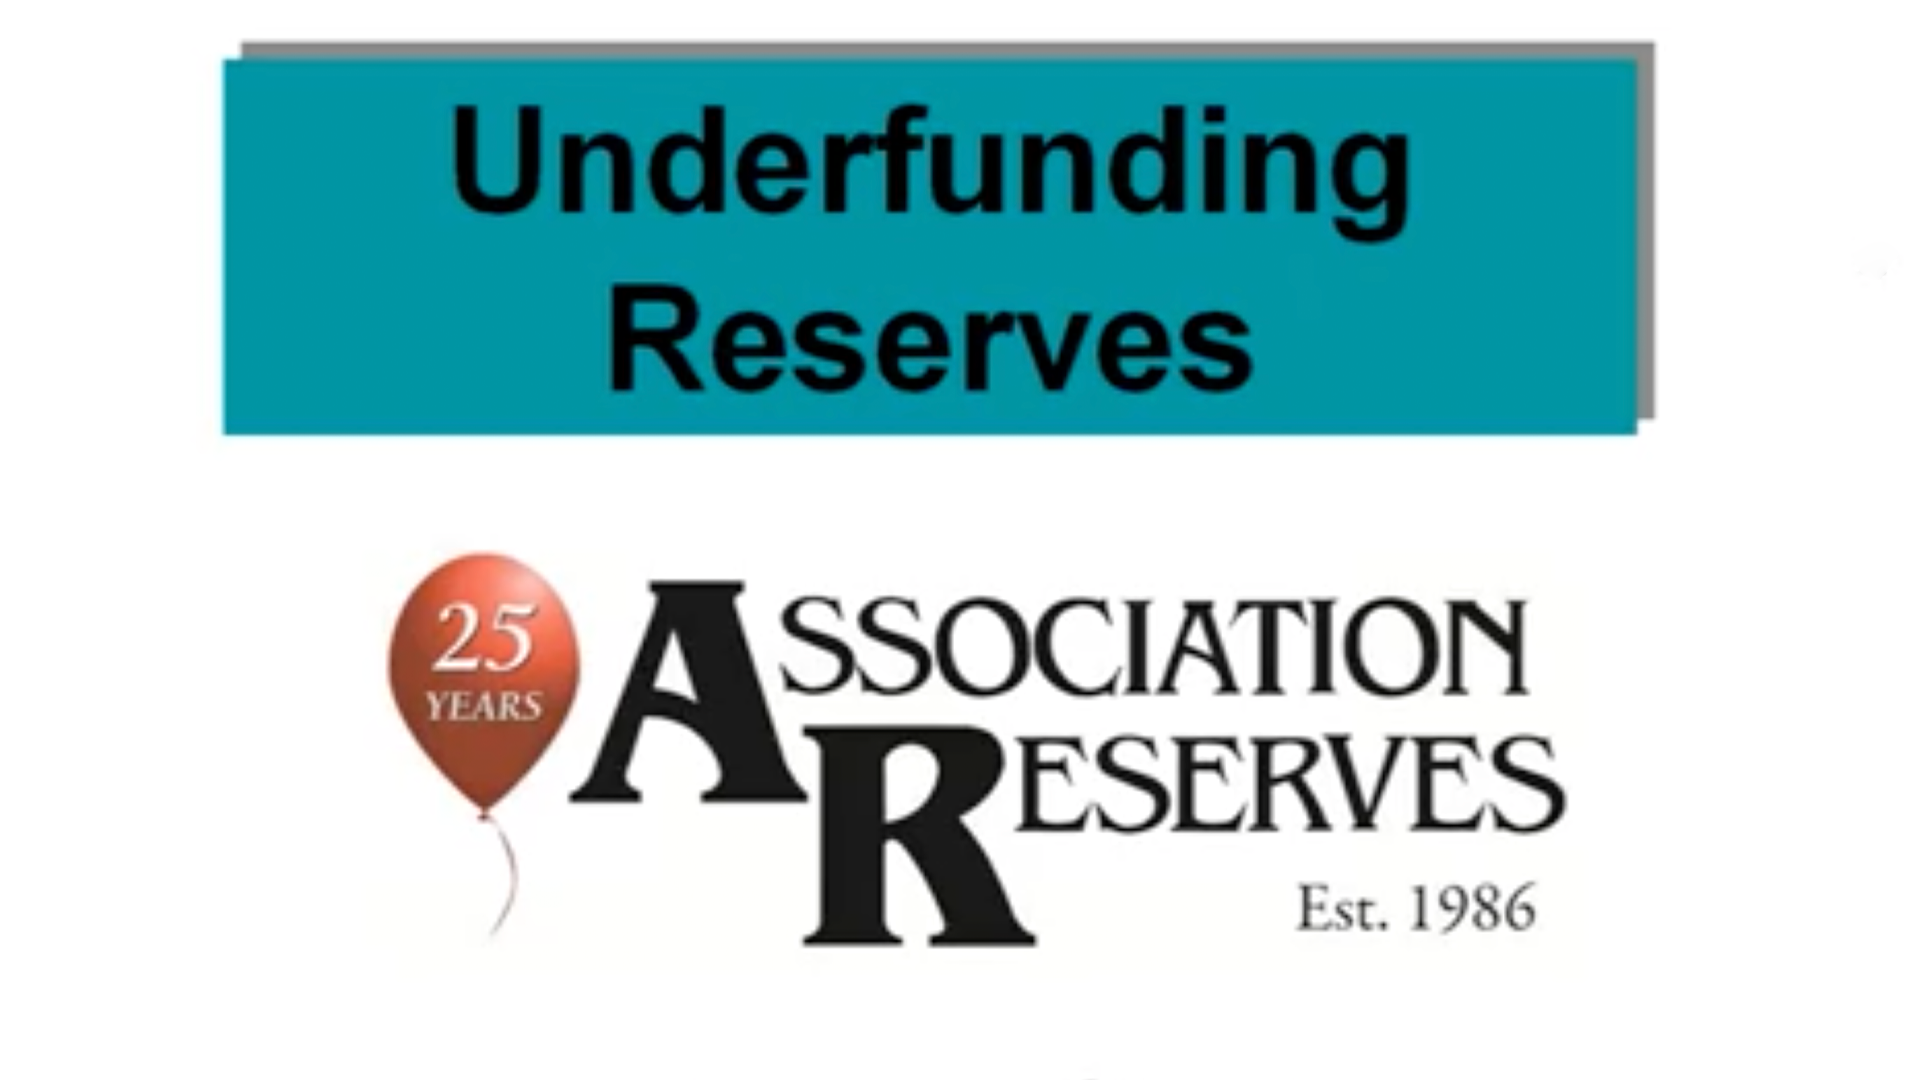 underfunding-reserves-webinar-association-reserves